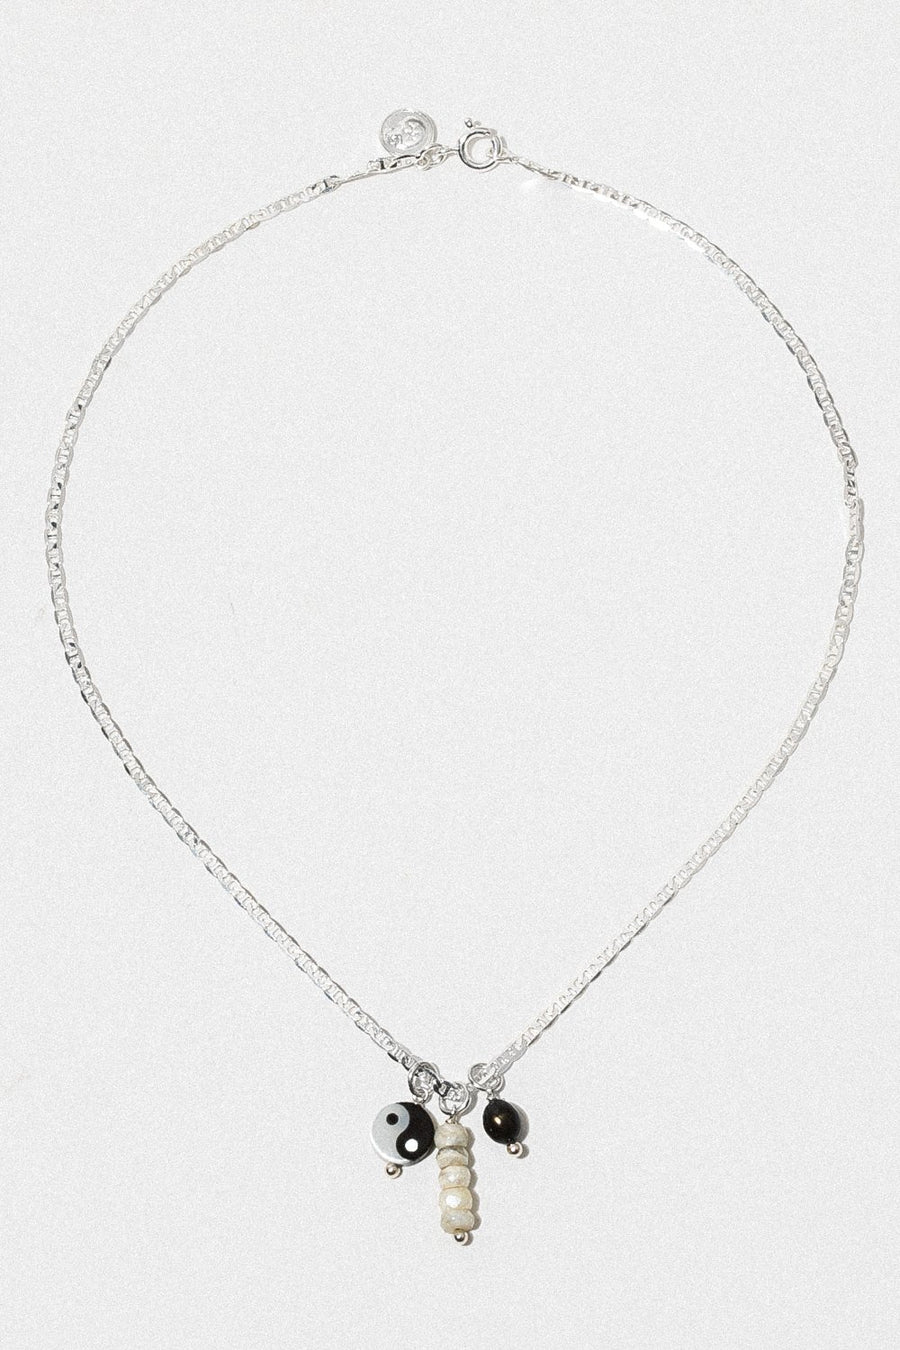 Dona Italia Jewelry Silver / 14 Inches Vitality Yin Yang Charm Necklace